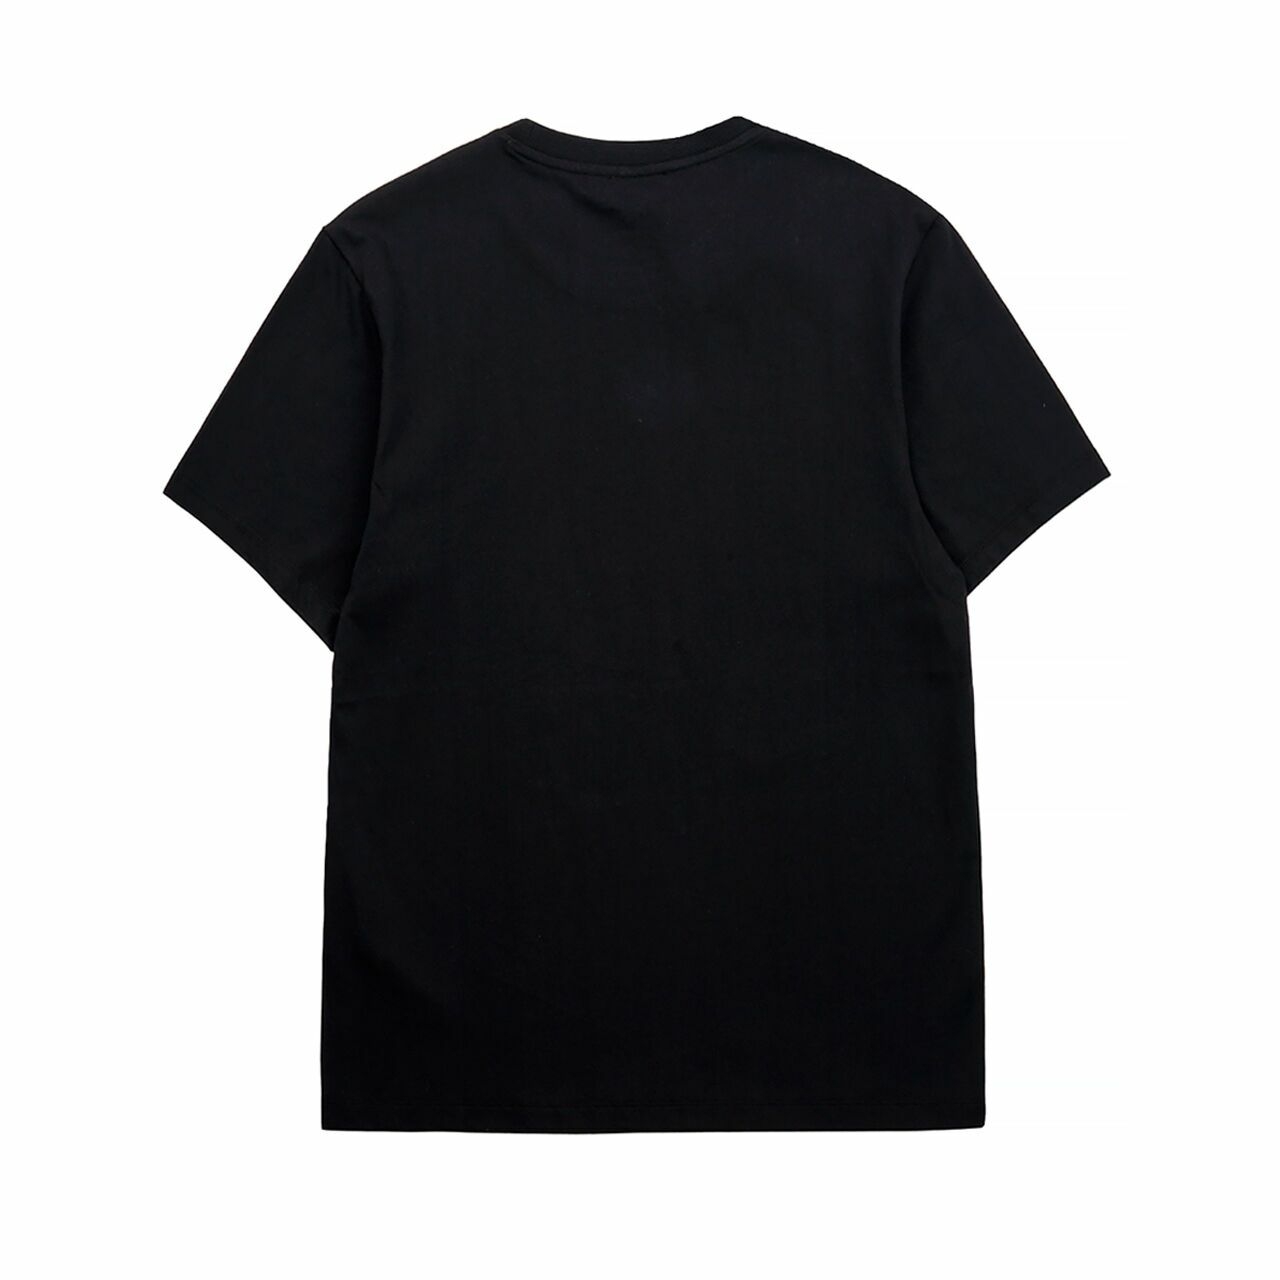 1017 ALYX 9SM Black Double Logo T-Shirt